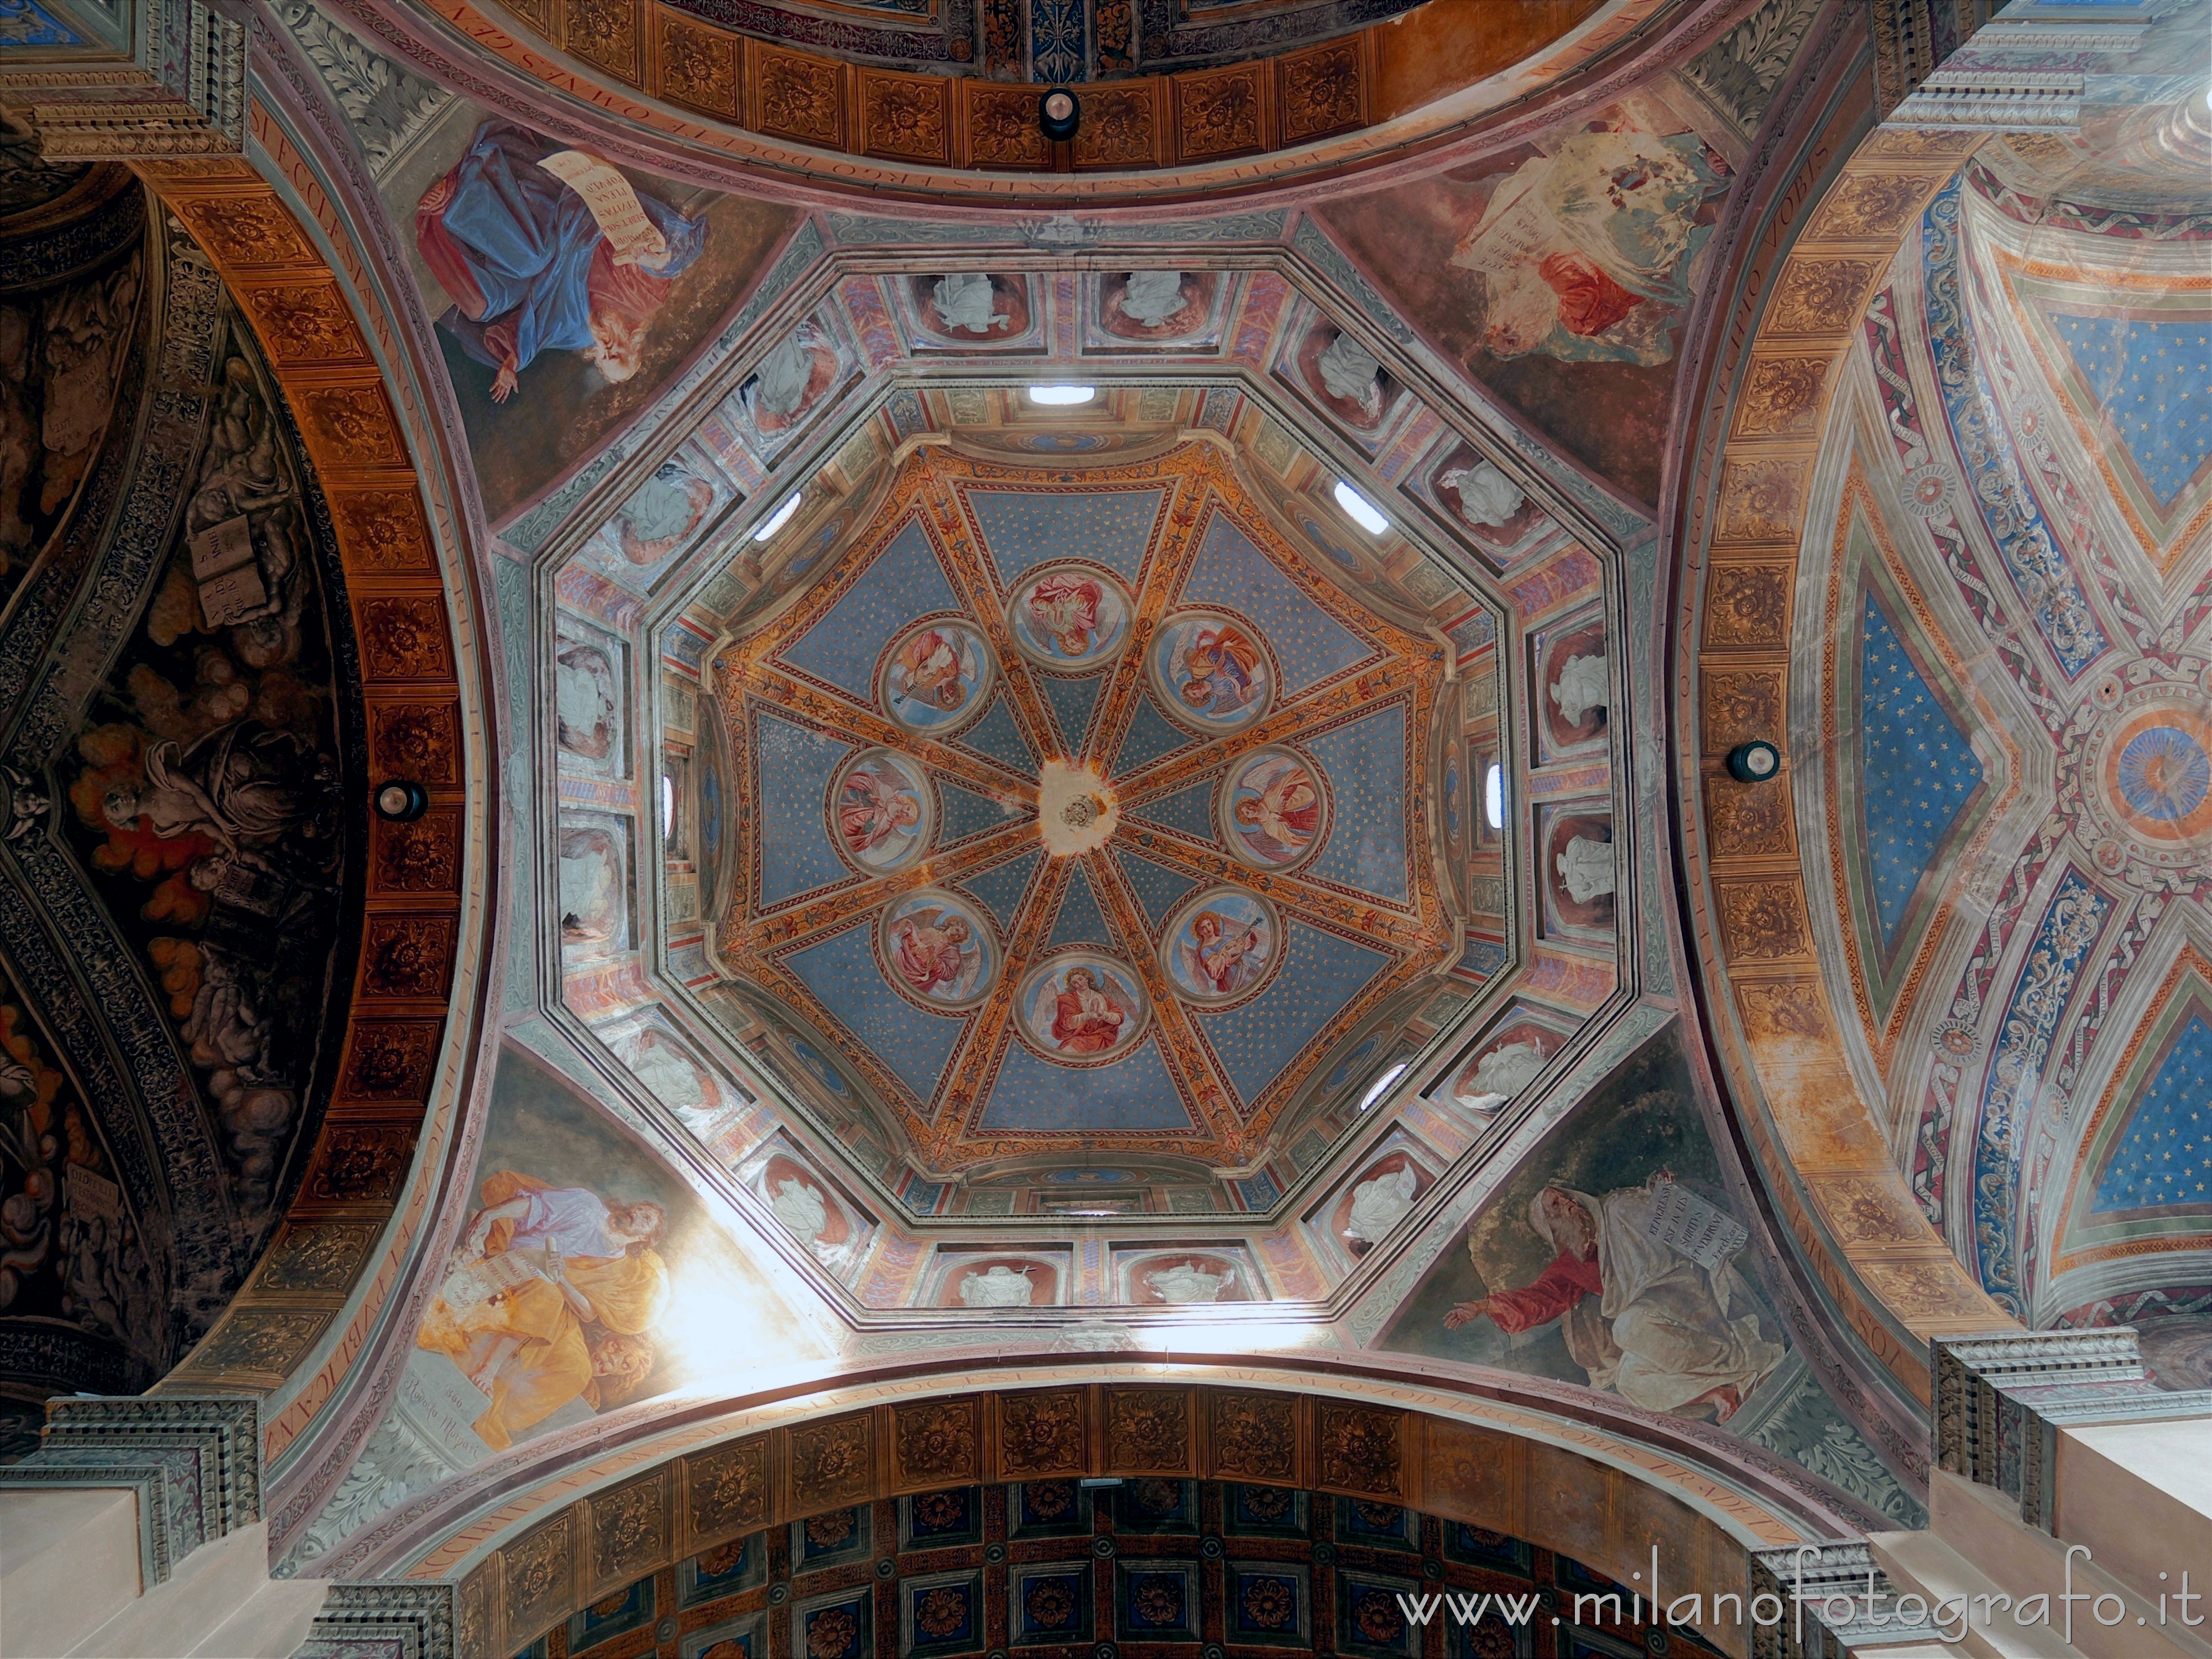 Biella (Italy): Ceiling of the transept of the Basilica of San Sebastiano - Biella (Italy)